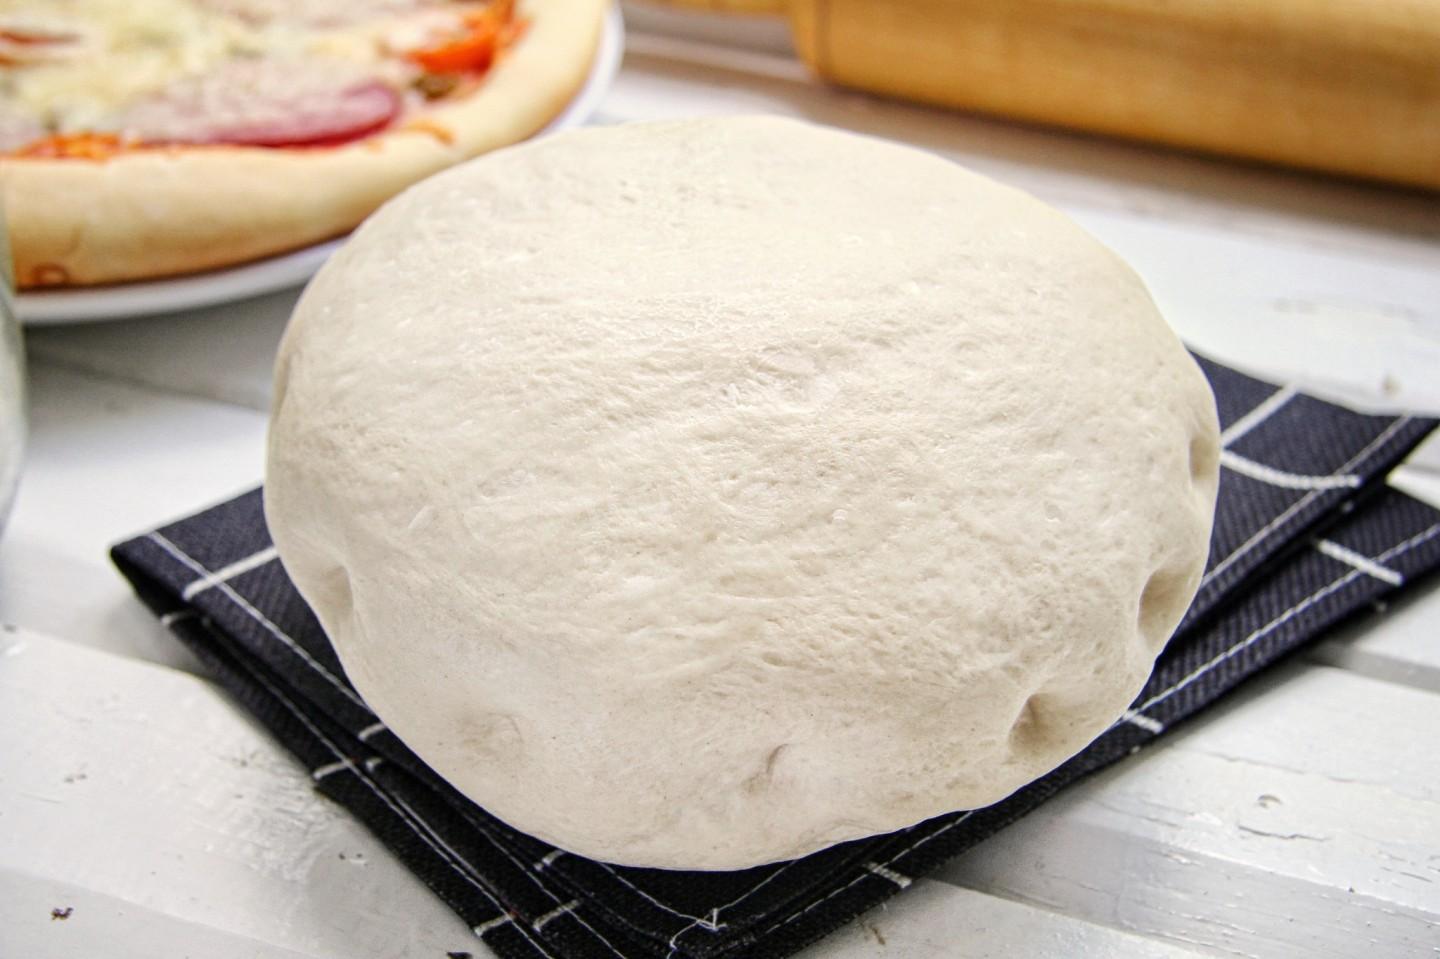 хрустящие тесто для пиццы без дрожжей рецепт с фото фото 60